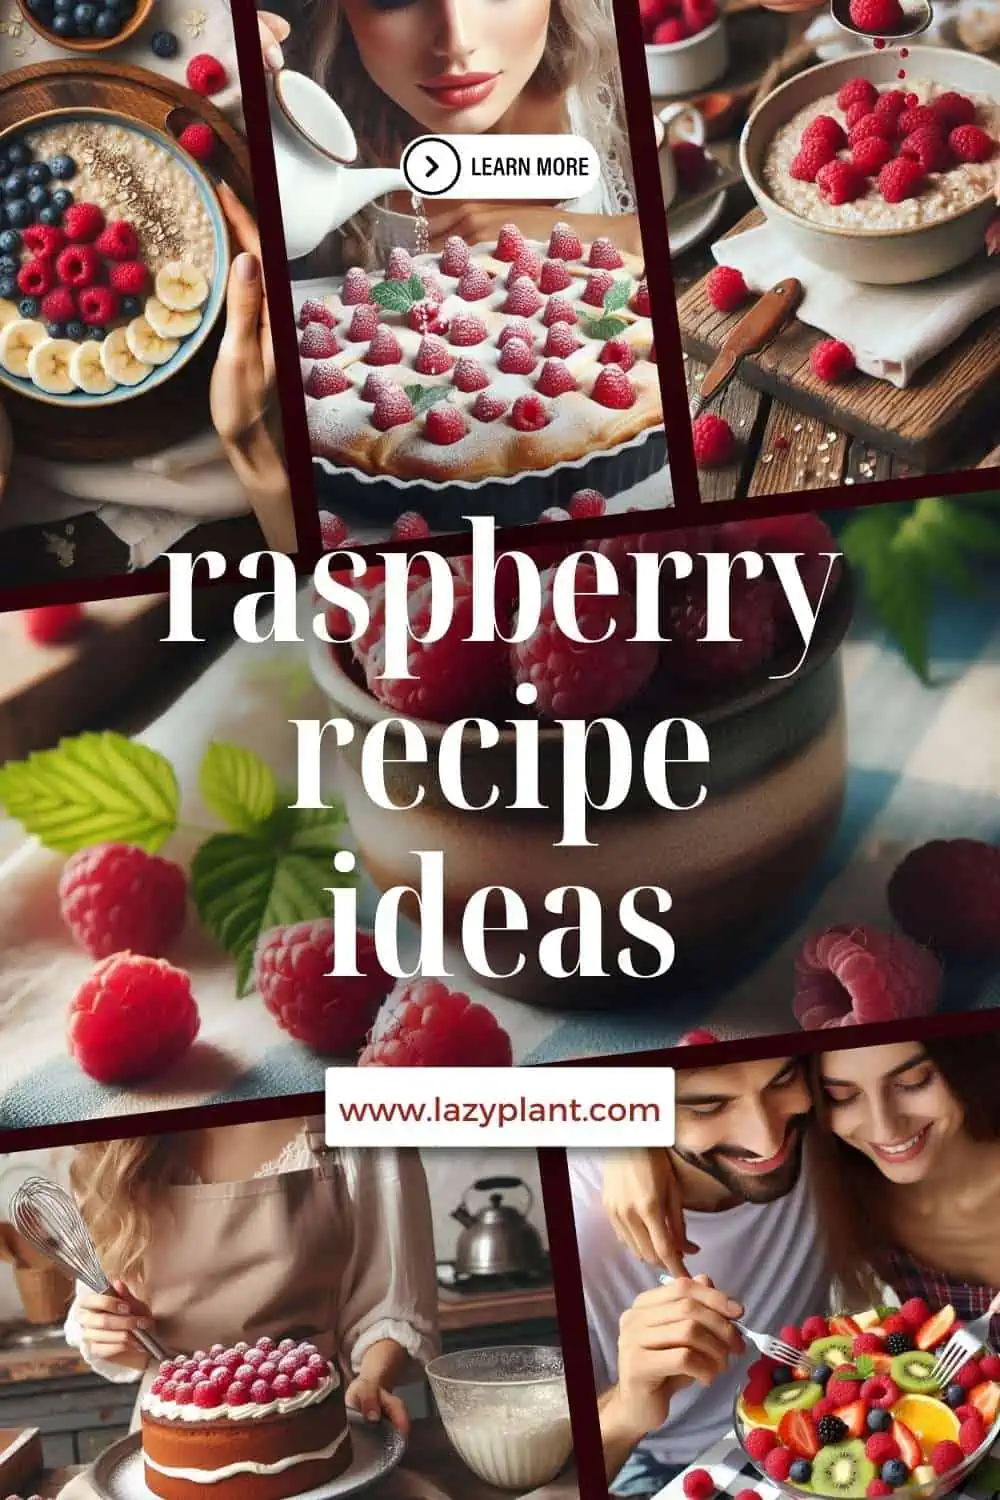 Raspberry recipe ideas for breakfast, dinner, or as a snack.